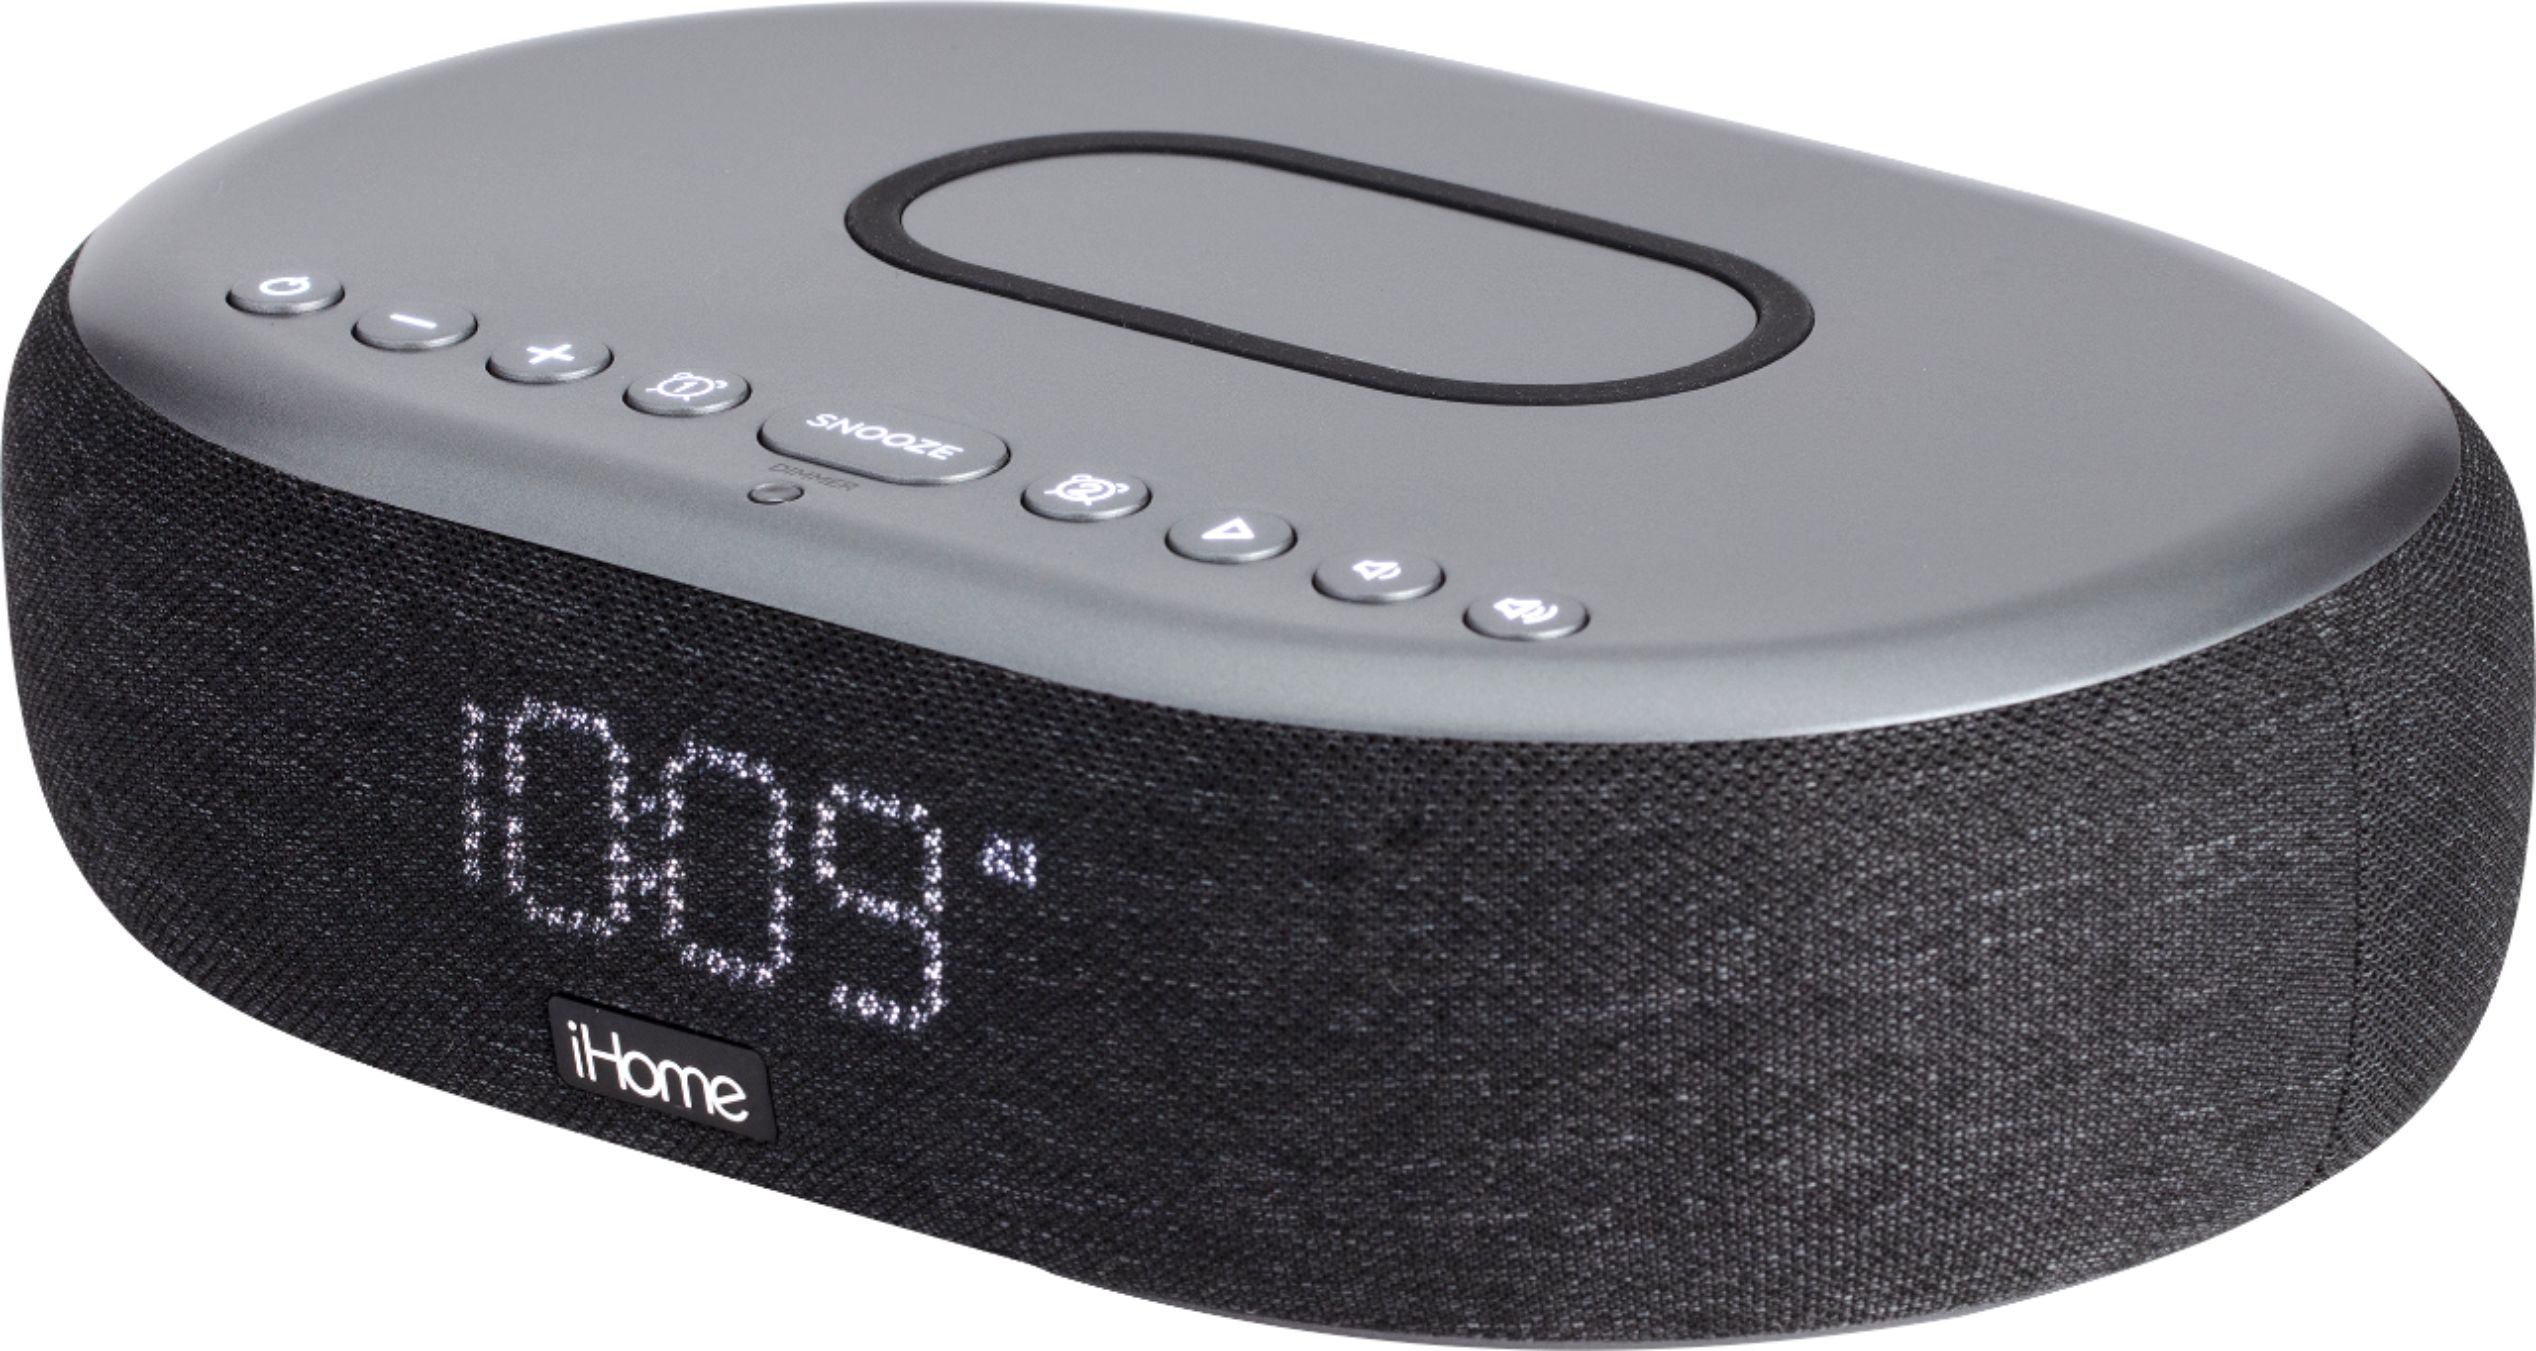 Angle View: Jensen - FM Alarm Clock Radio with Mood Lamp